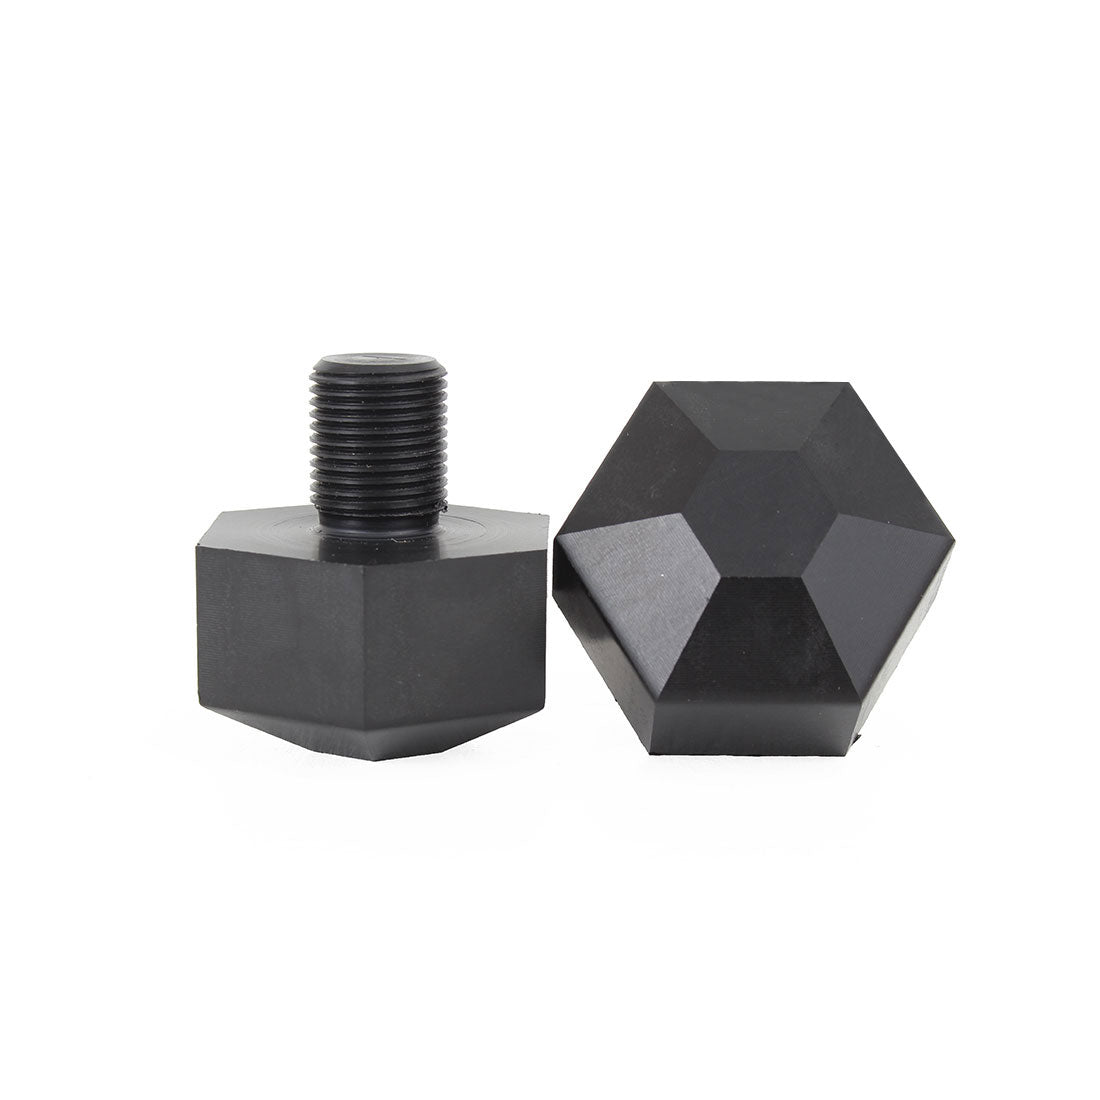 Disco Plugz Toe Stop Jam Plugs - Black Roller Skate Hardware and Parts